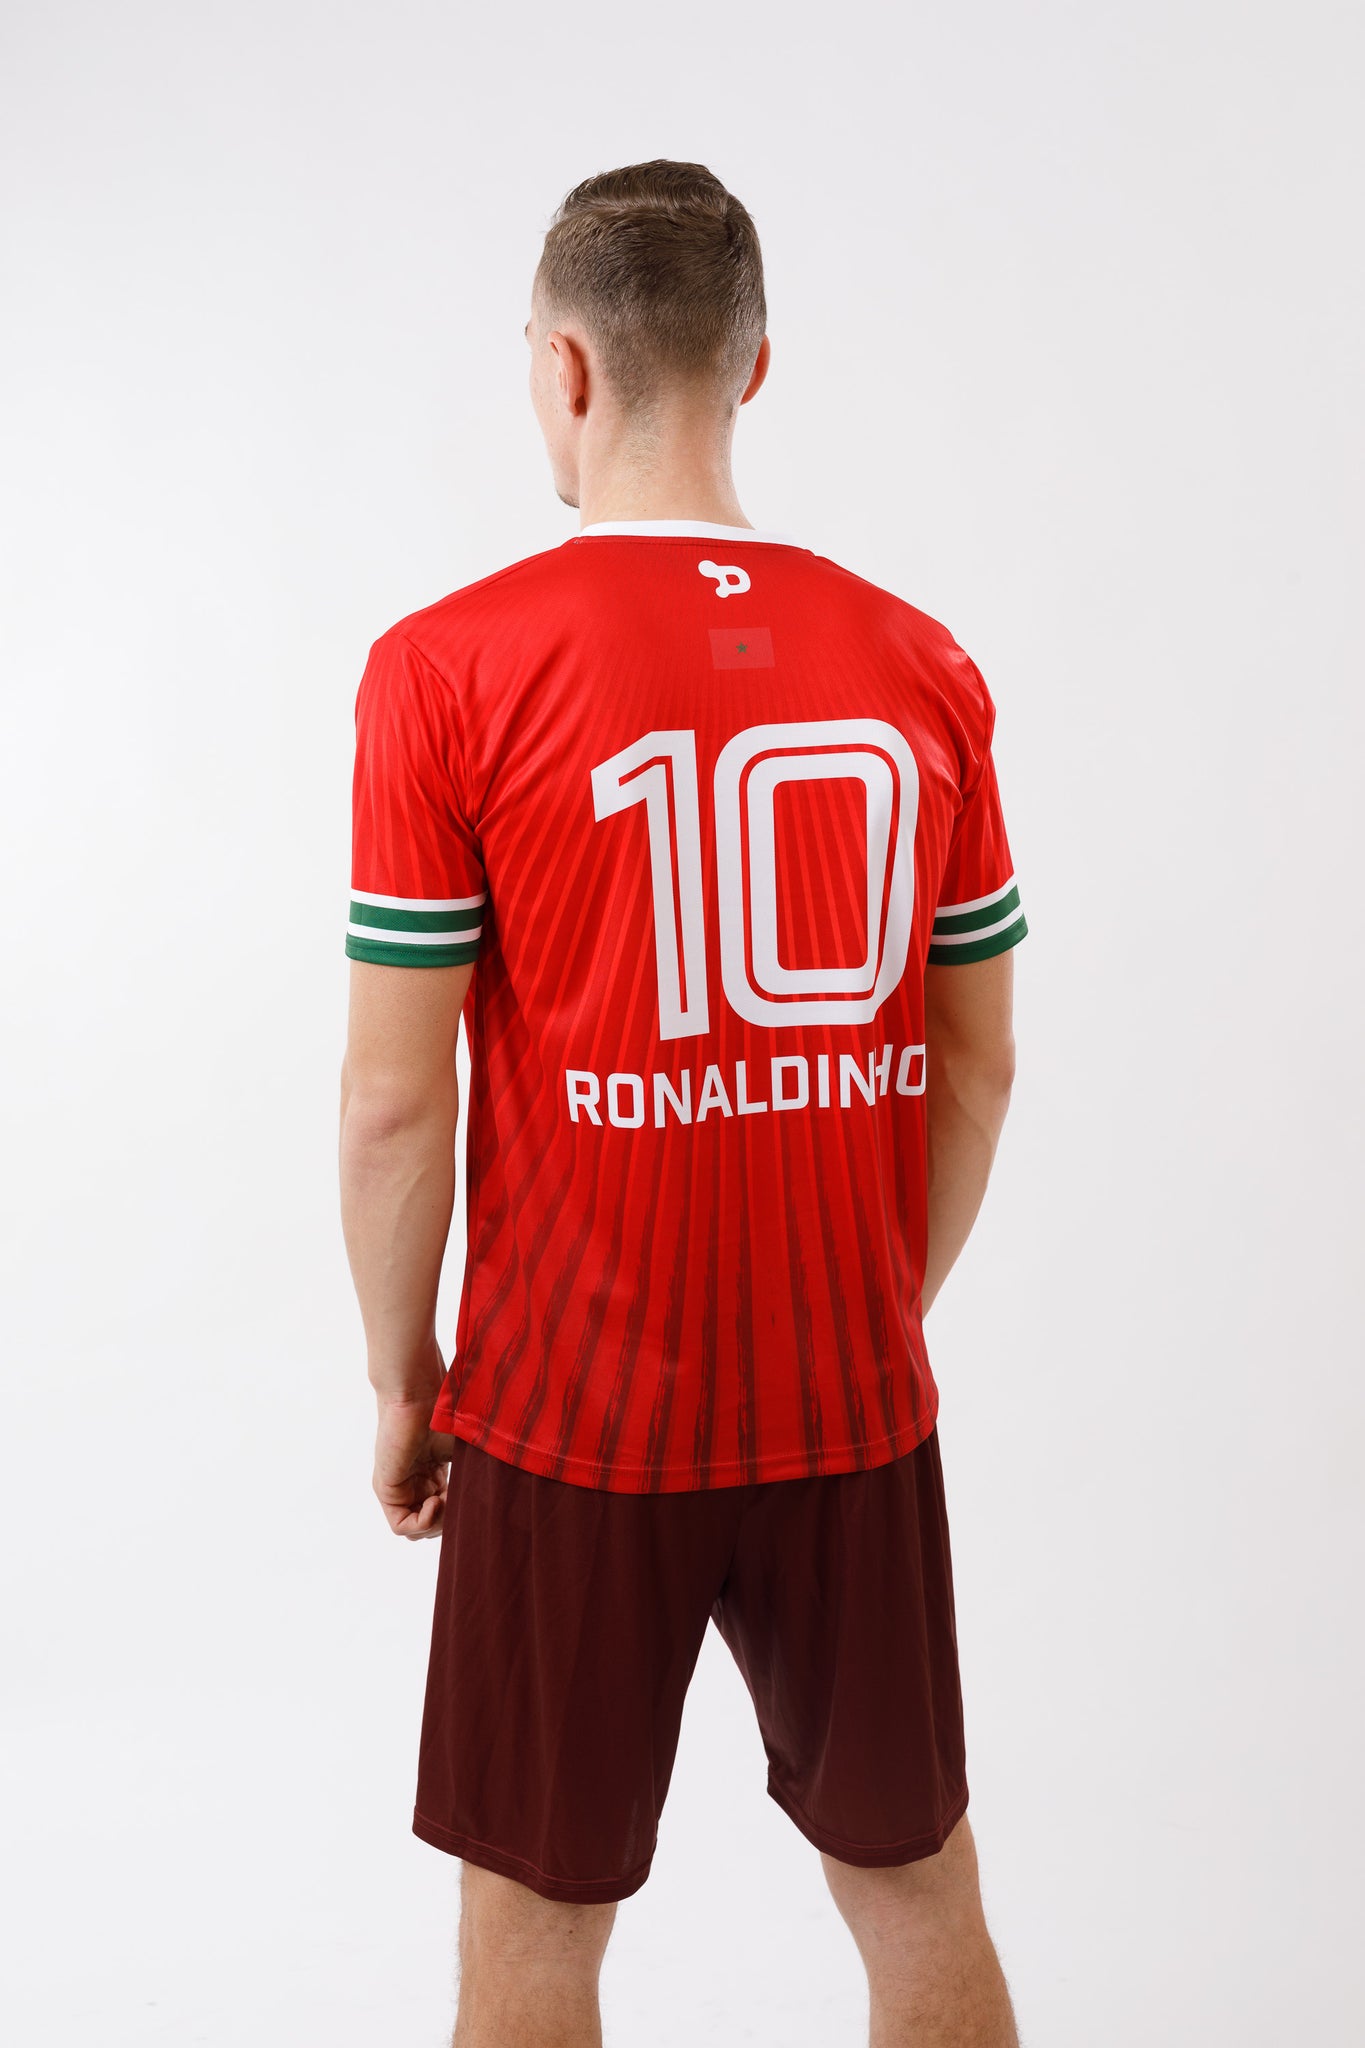 Ronaldinho Morocco Jersey/Camisa Replica